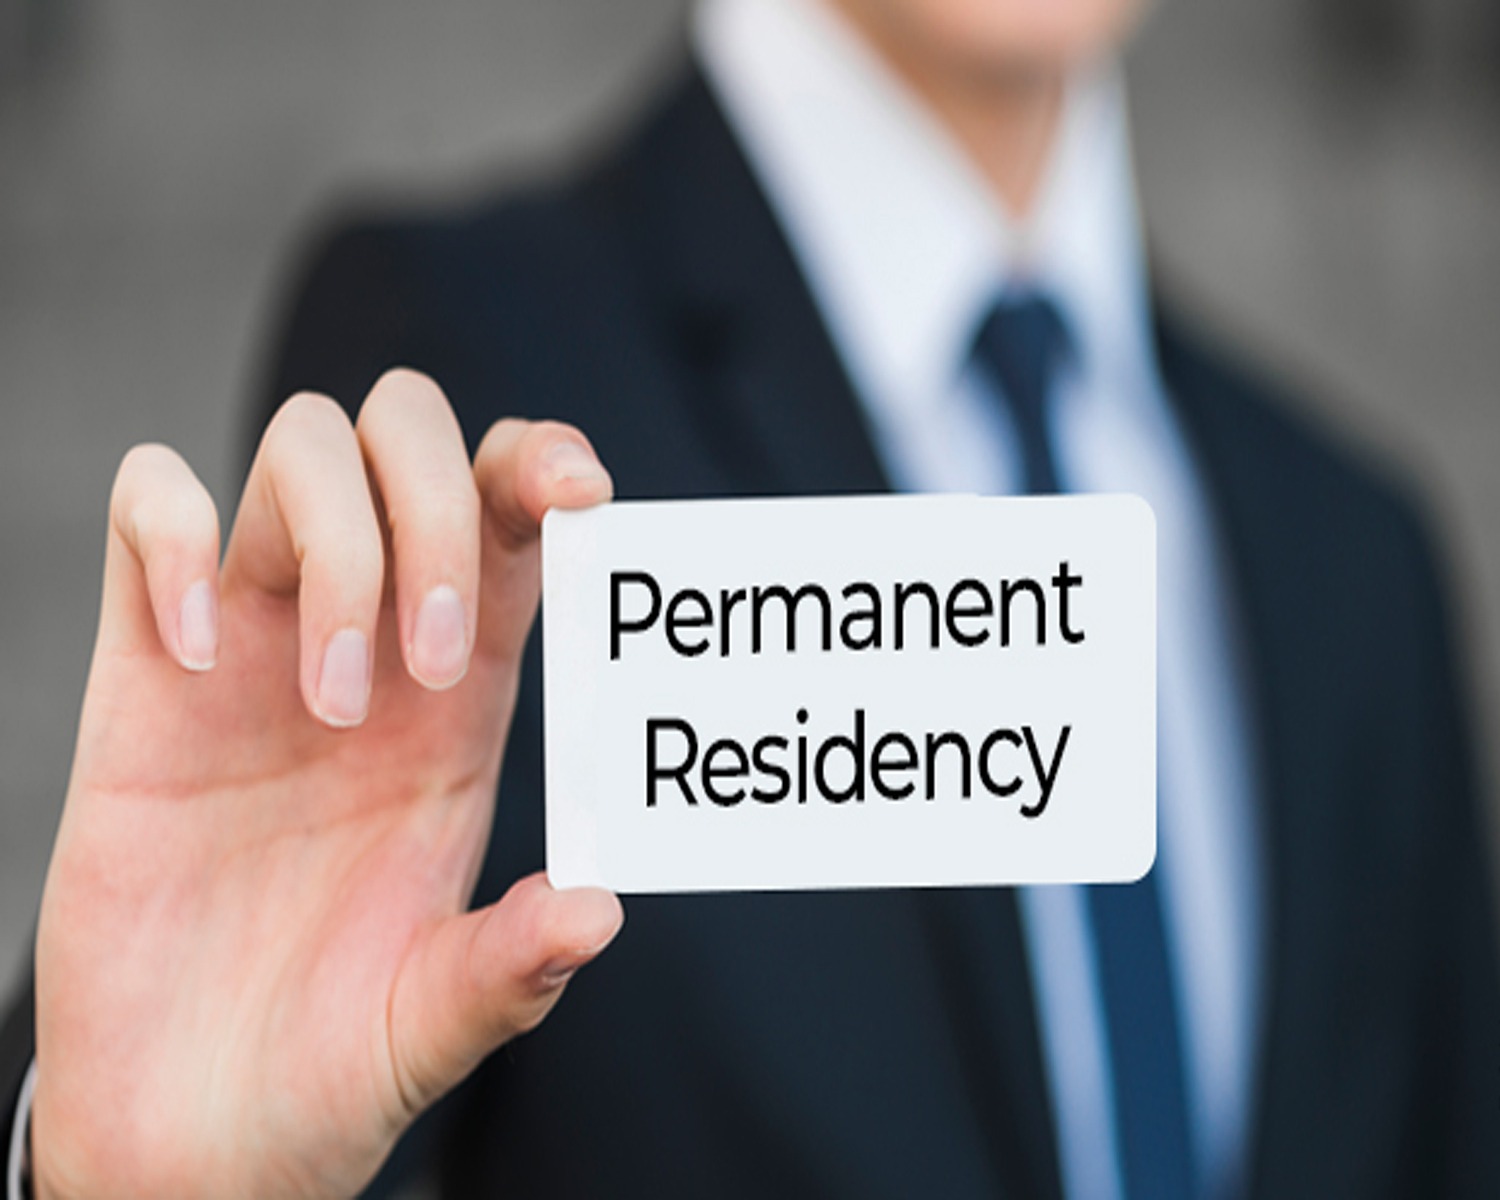 Permanent Residency in Australia through Automotive Courses